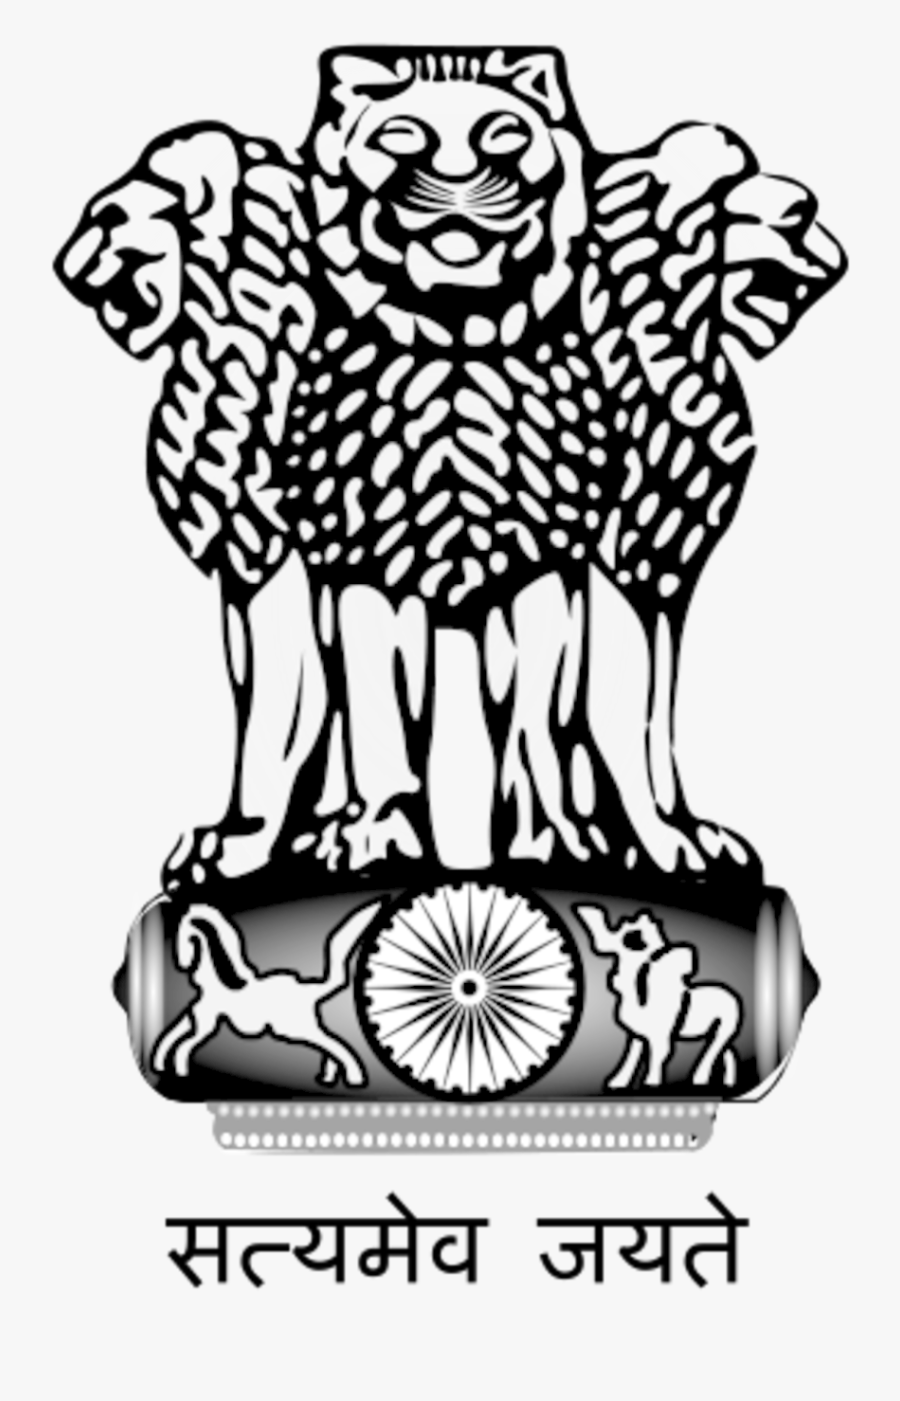 National Emblem Of India Png, Transparent Clipart